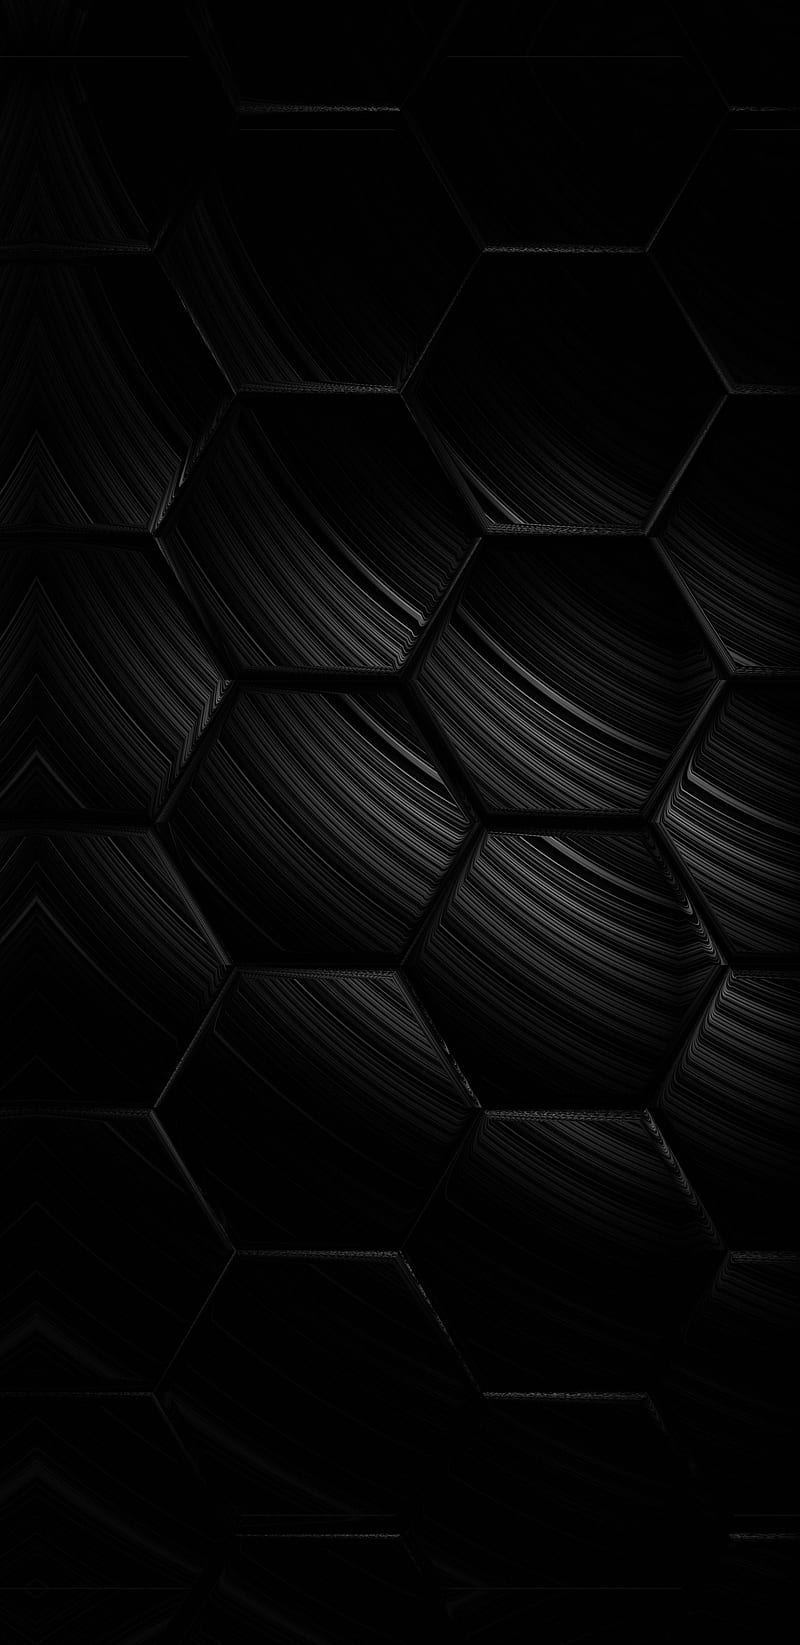 Details 100 black digital background - Abzlocal.mx